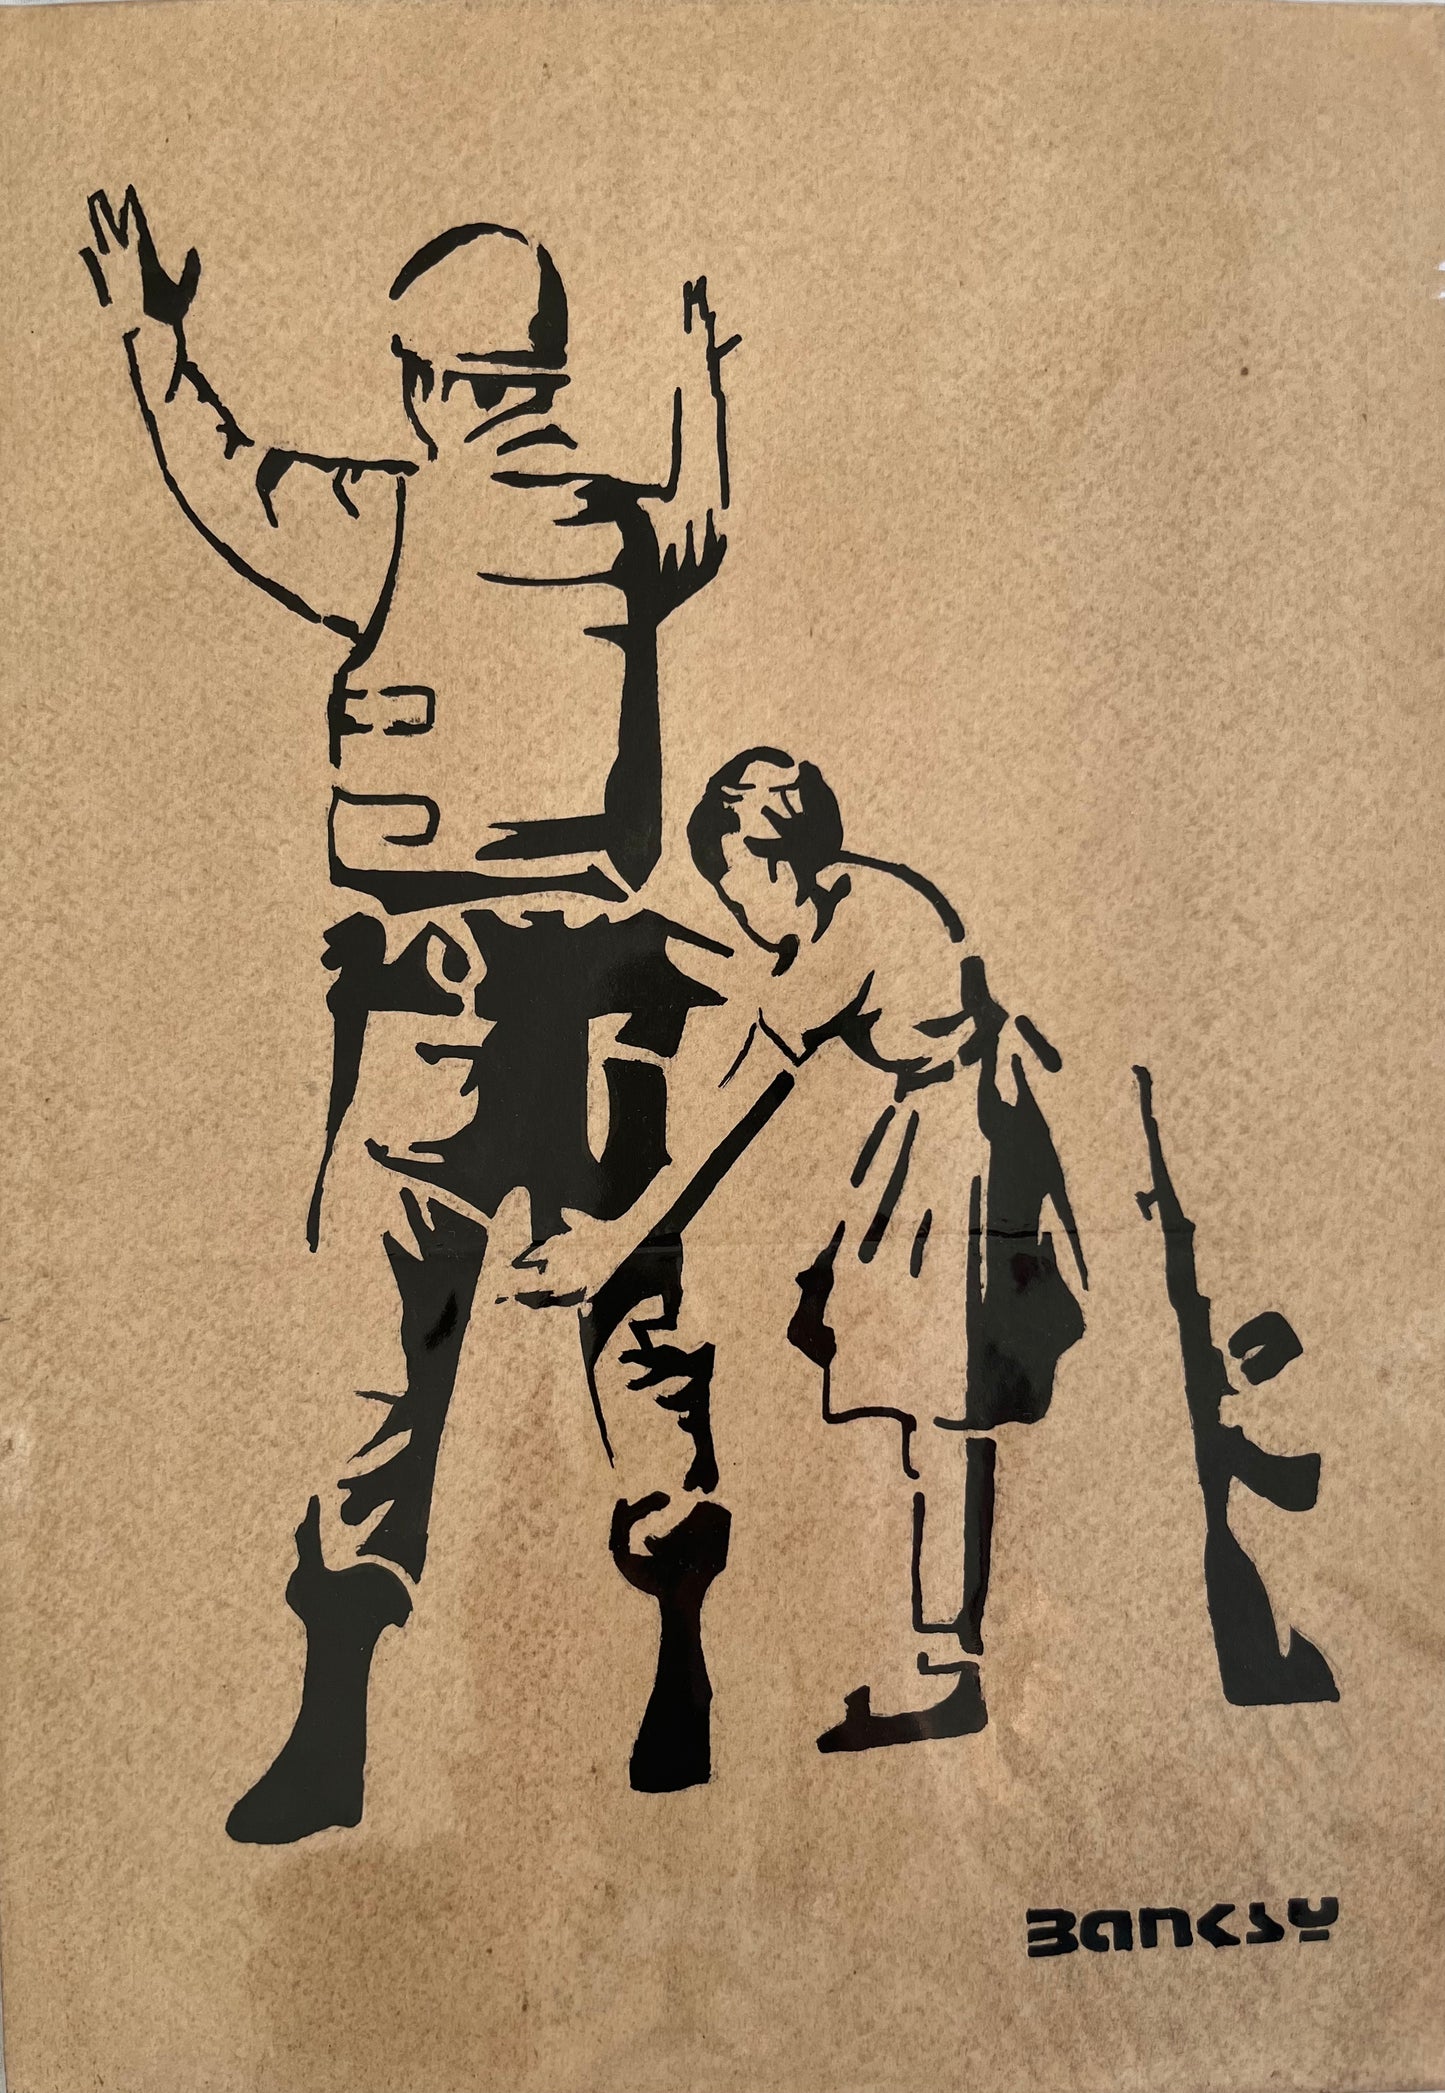 BANKSY x TATE - Girl Frisking Soldier - Drawing on art paper